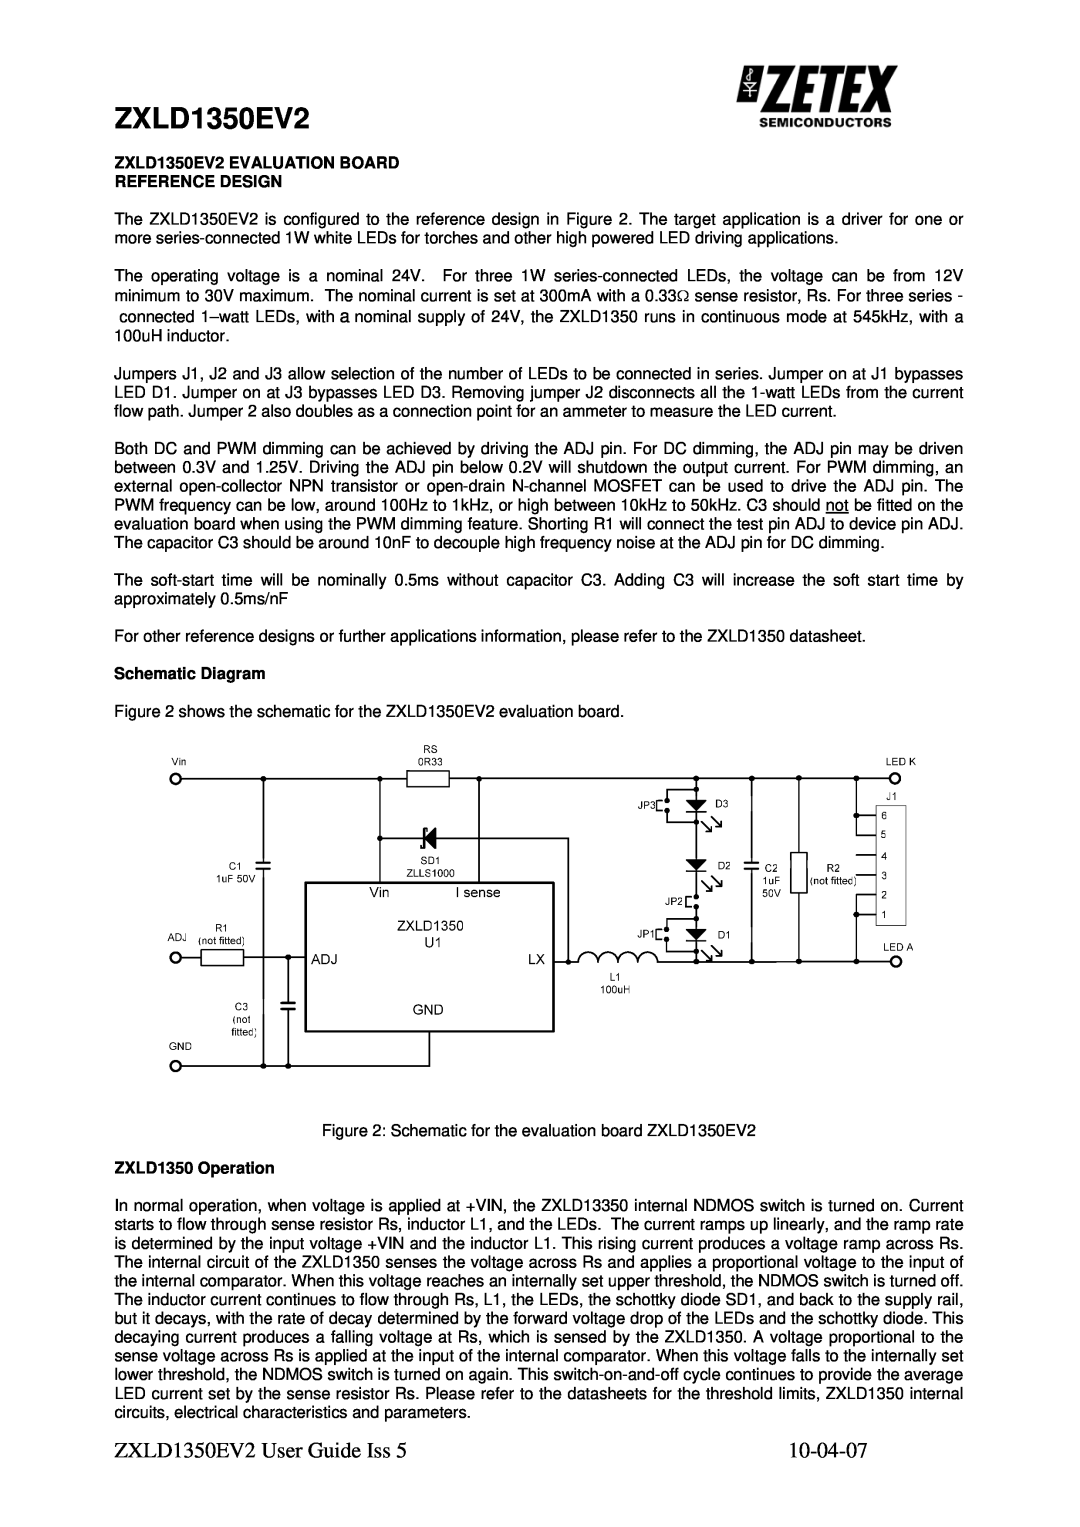 Zetex Semiconductors PLC zxld1350ev2 manual ZXLD1350EV2 User Guide Iss, 10-04-07, Schematic Diagram, ZXLD1350 Operation 